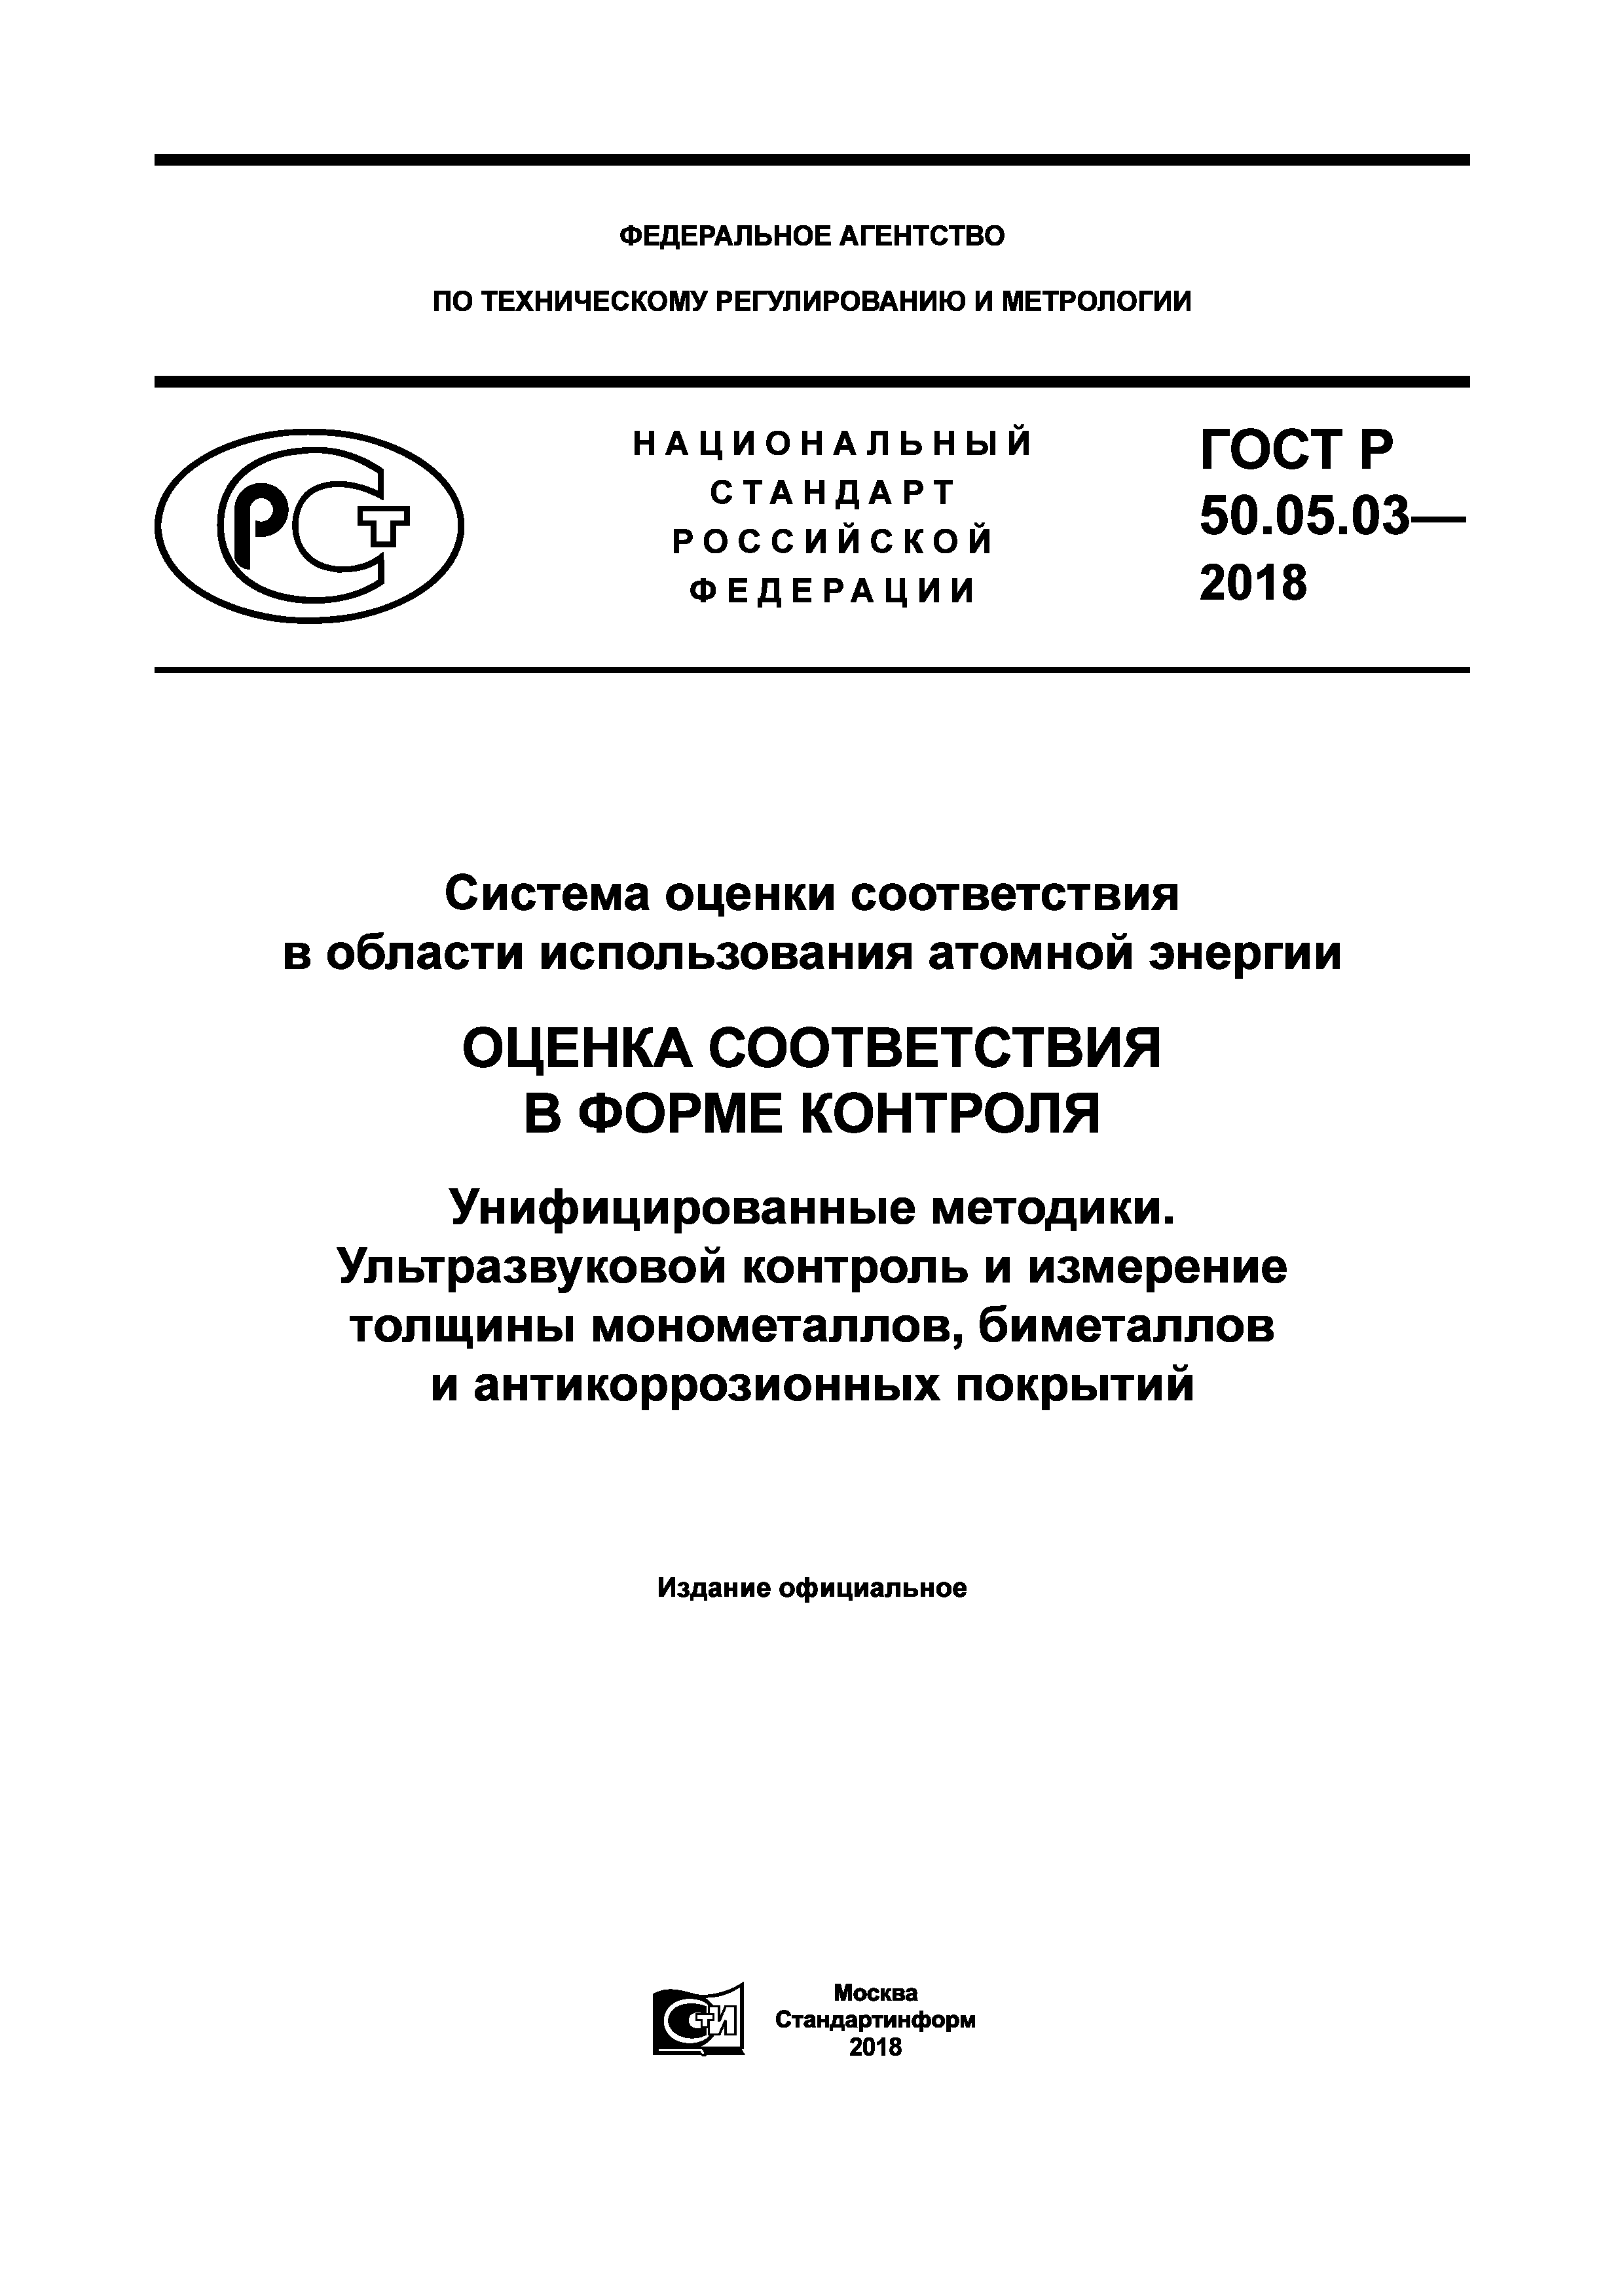 ГОСТ Р 50.05.03-2018